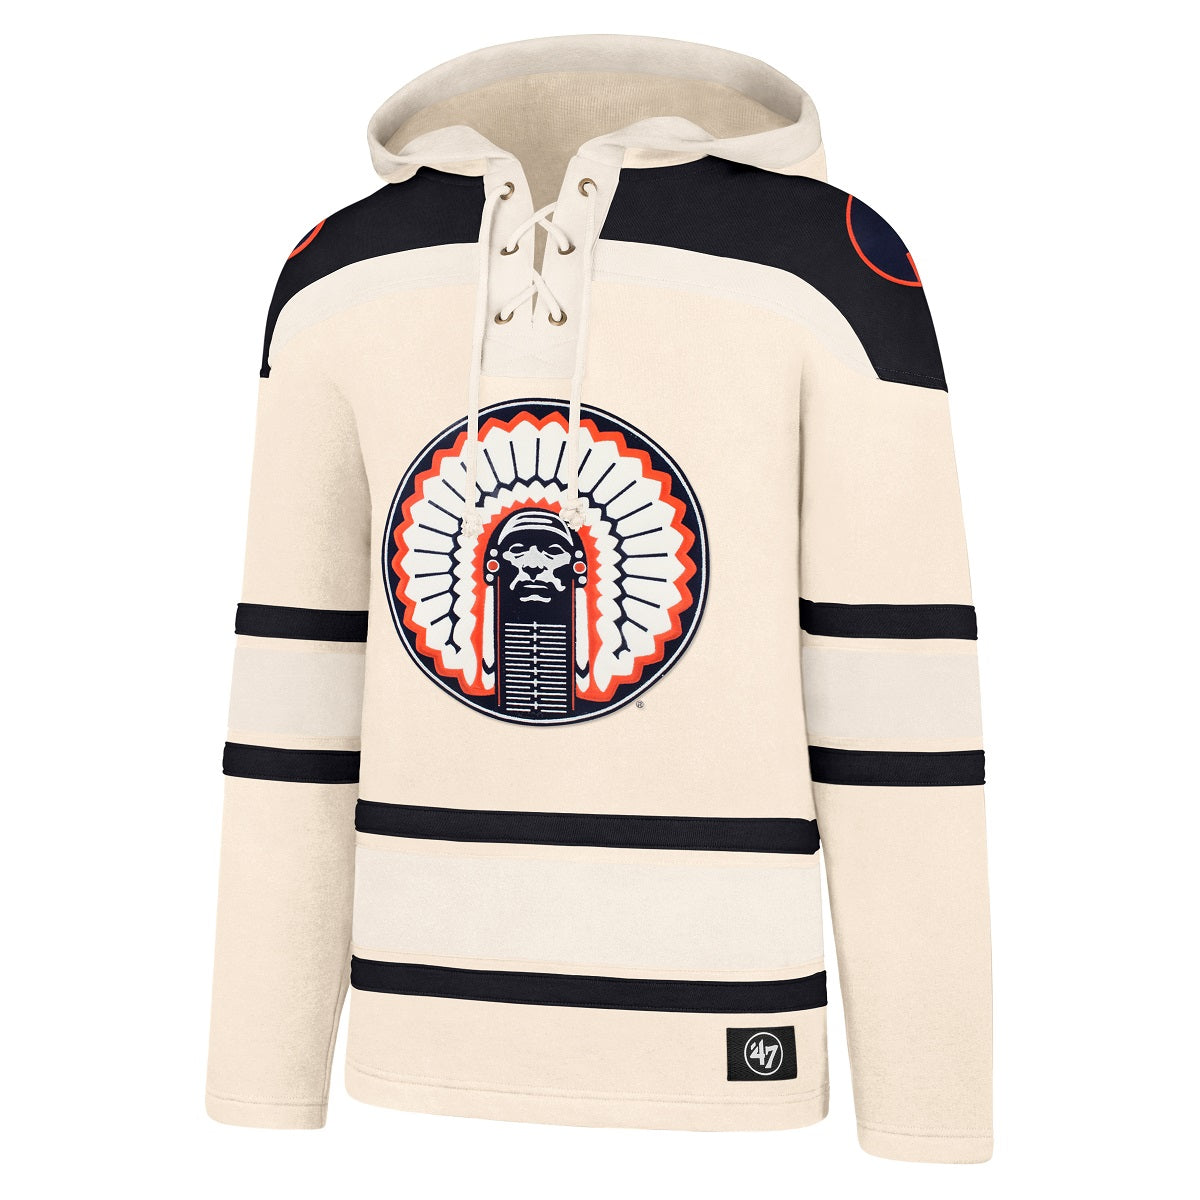 NHL '47 Hoodies, NHL Hockey Hooded Sweatshirts, NHL Lace Up Hoodies